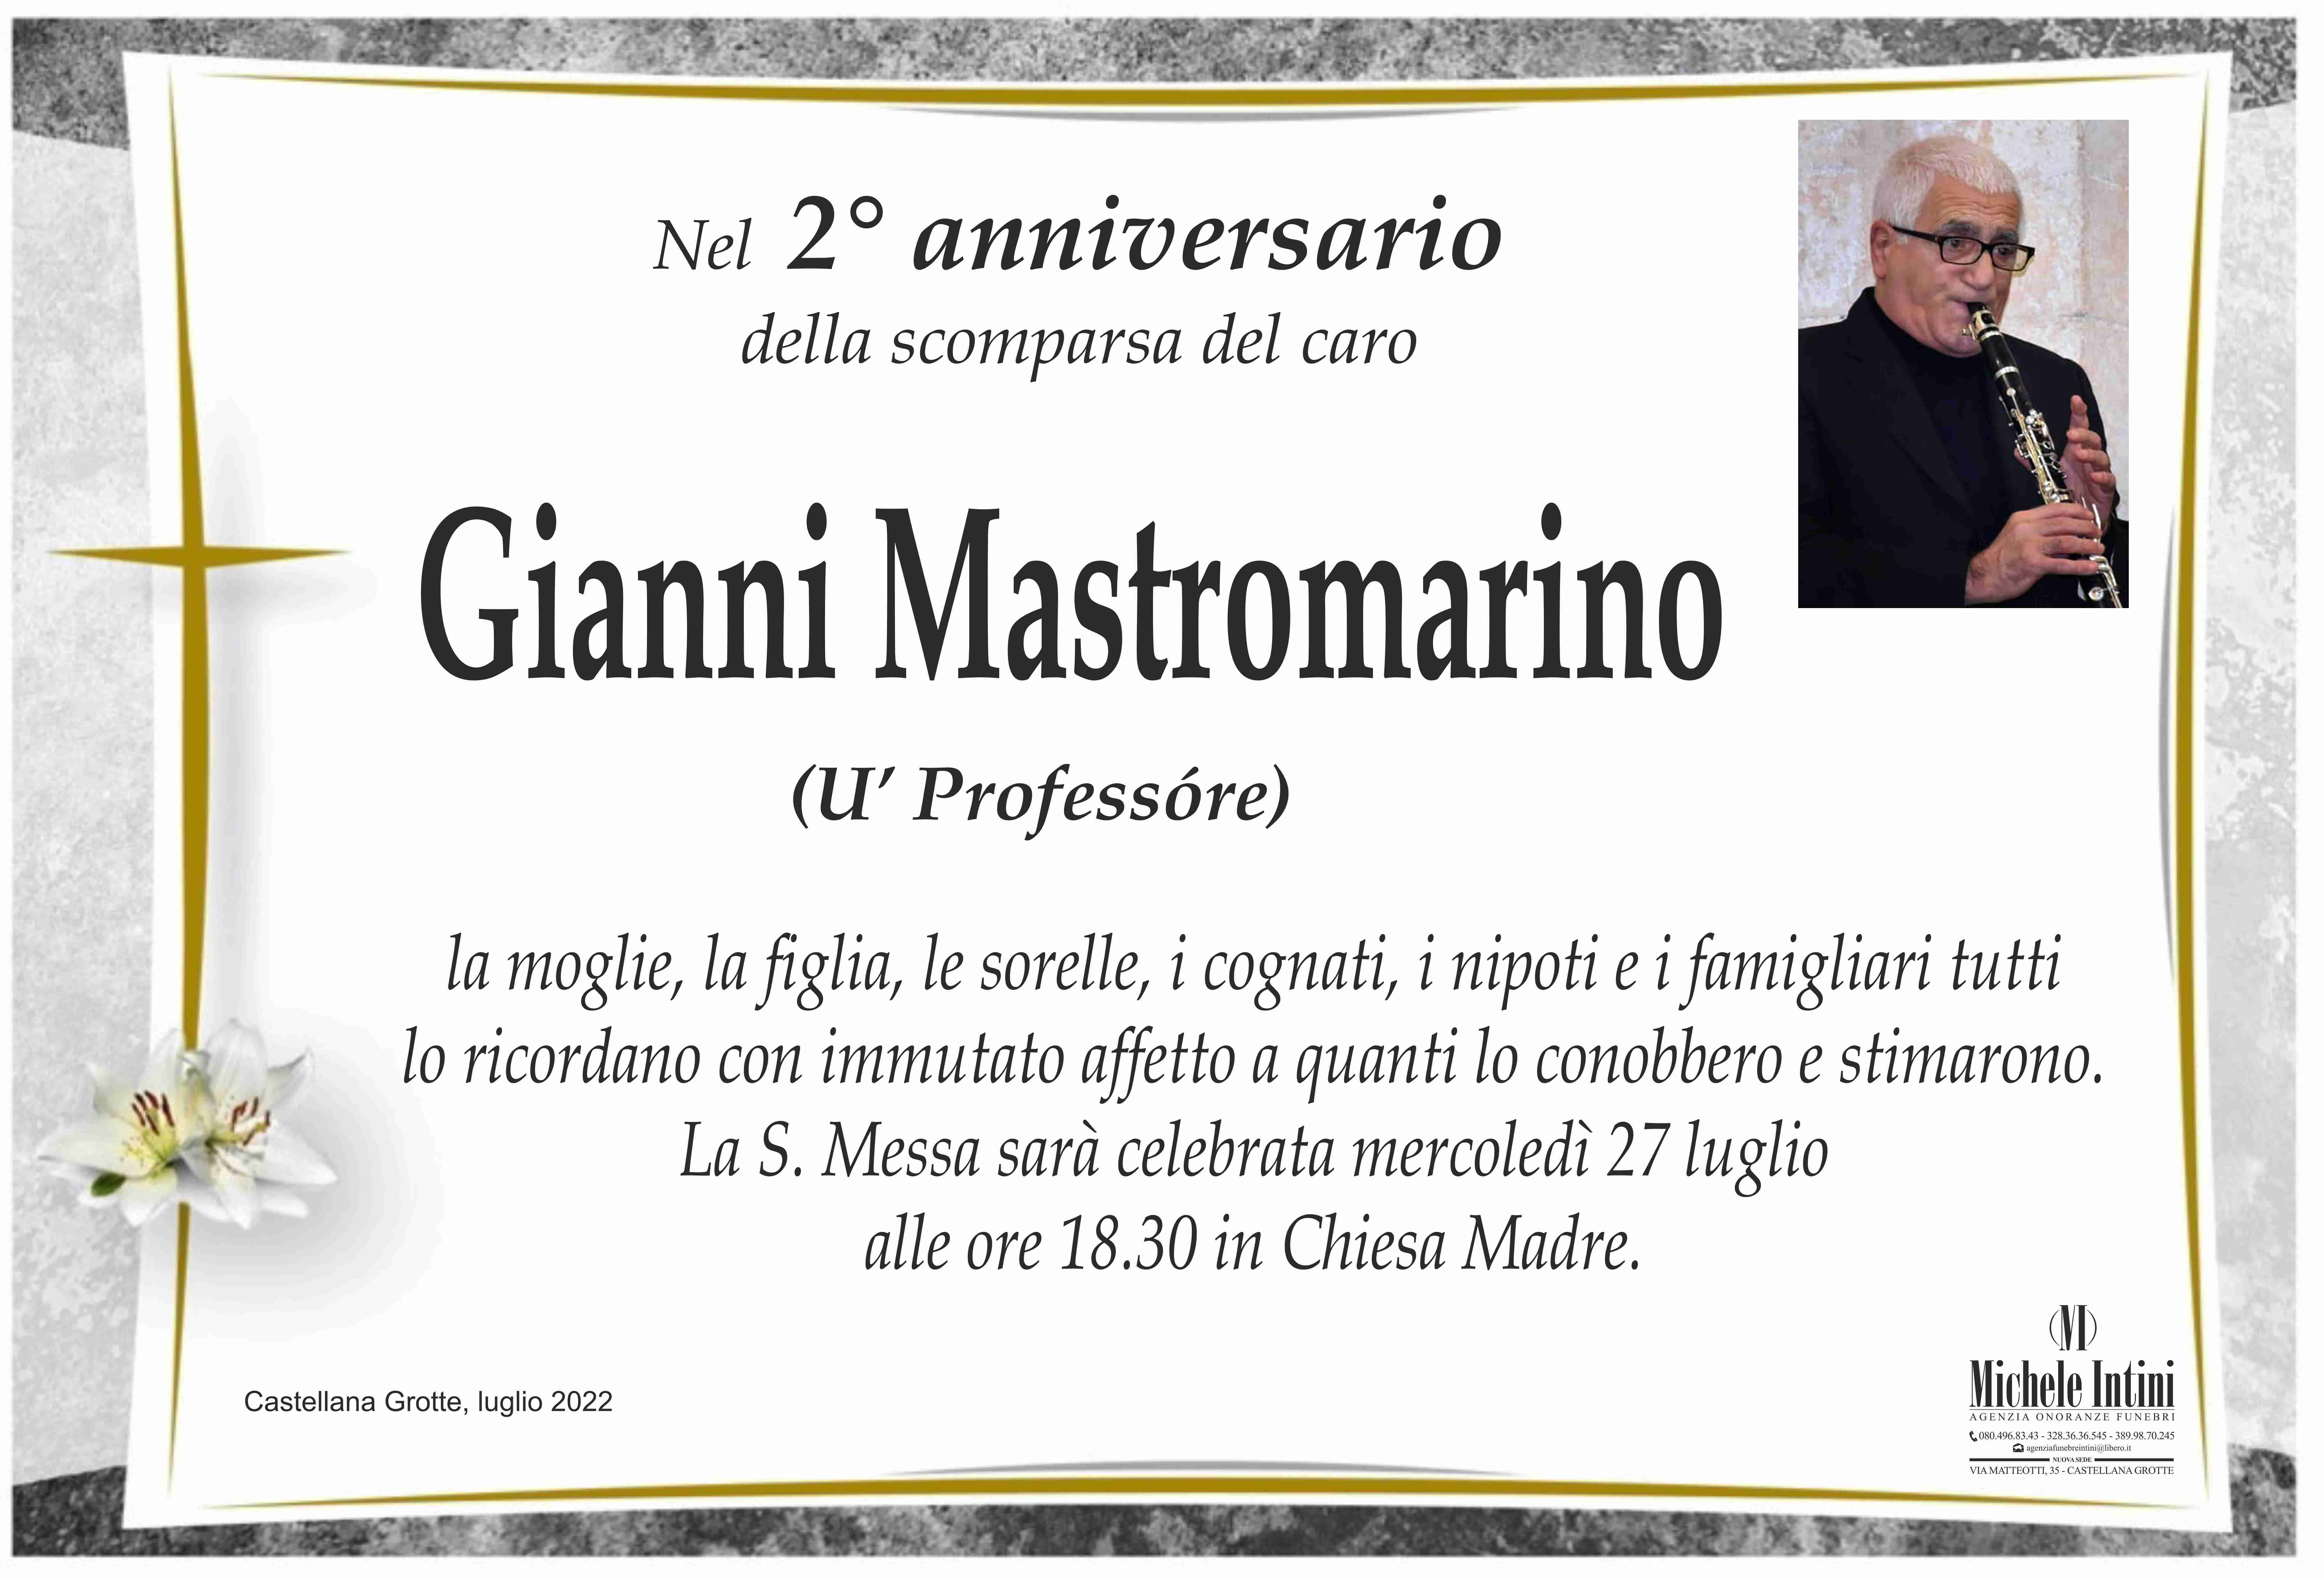 Giovanni Mastromarino